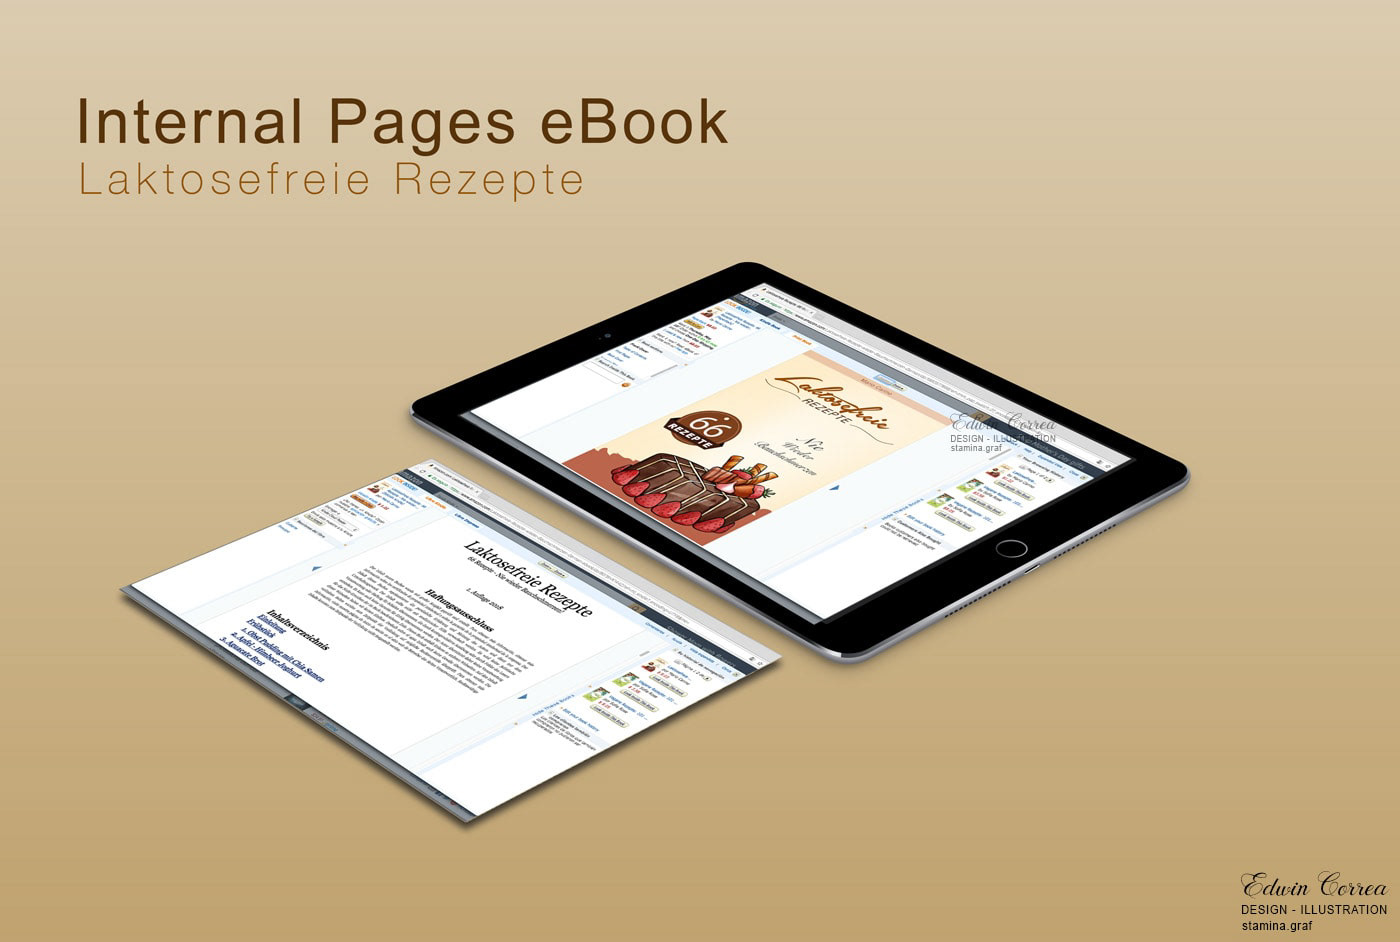 edwin correa dieta eBook design receta leche aleman libro ilustracion diseño gráfico cover design libro cocina diseño ilustración